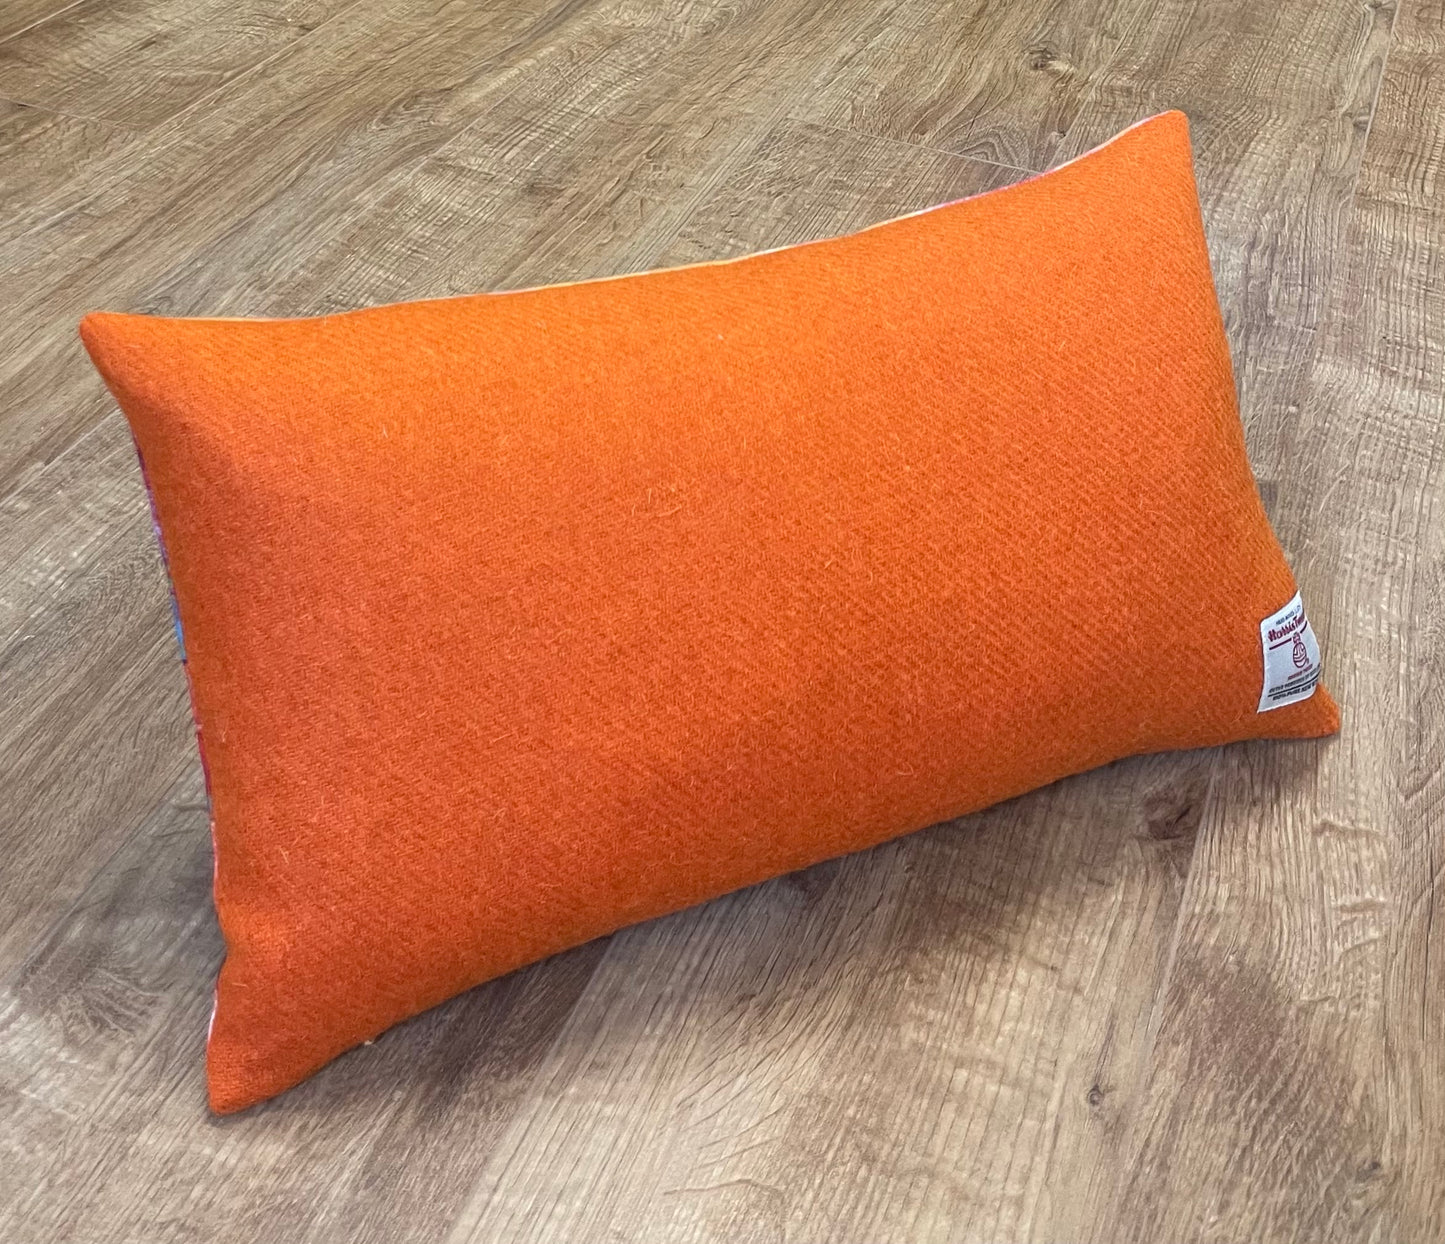 Blue River Velvet and Orange Harris Tweed Oblong Cushion